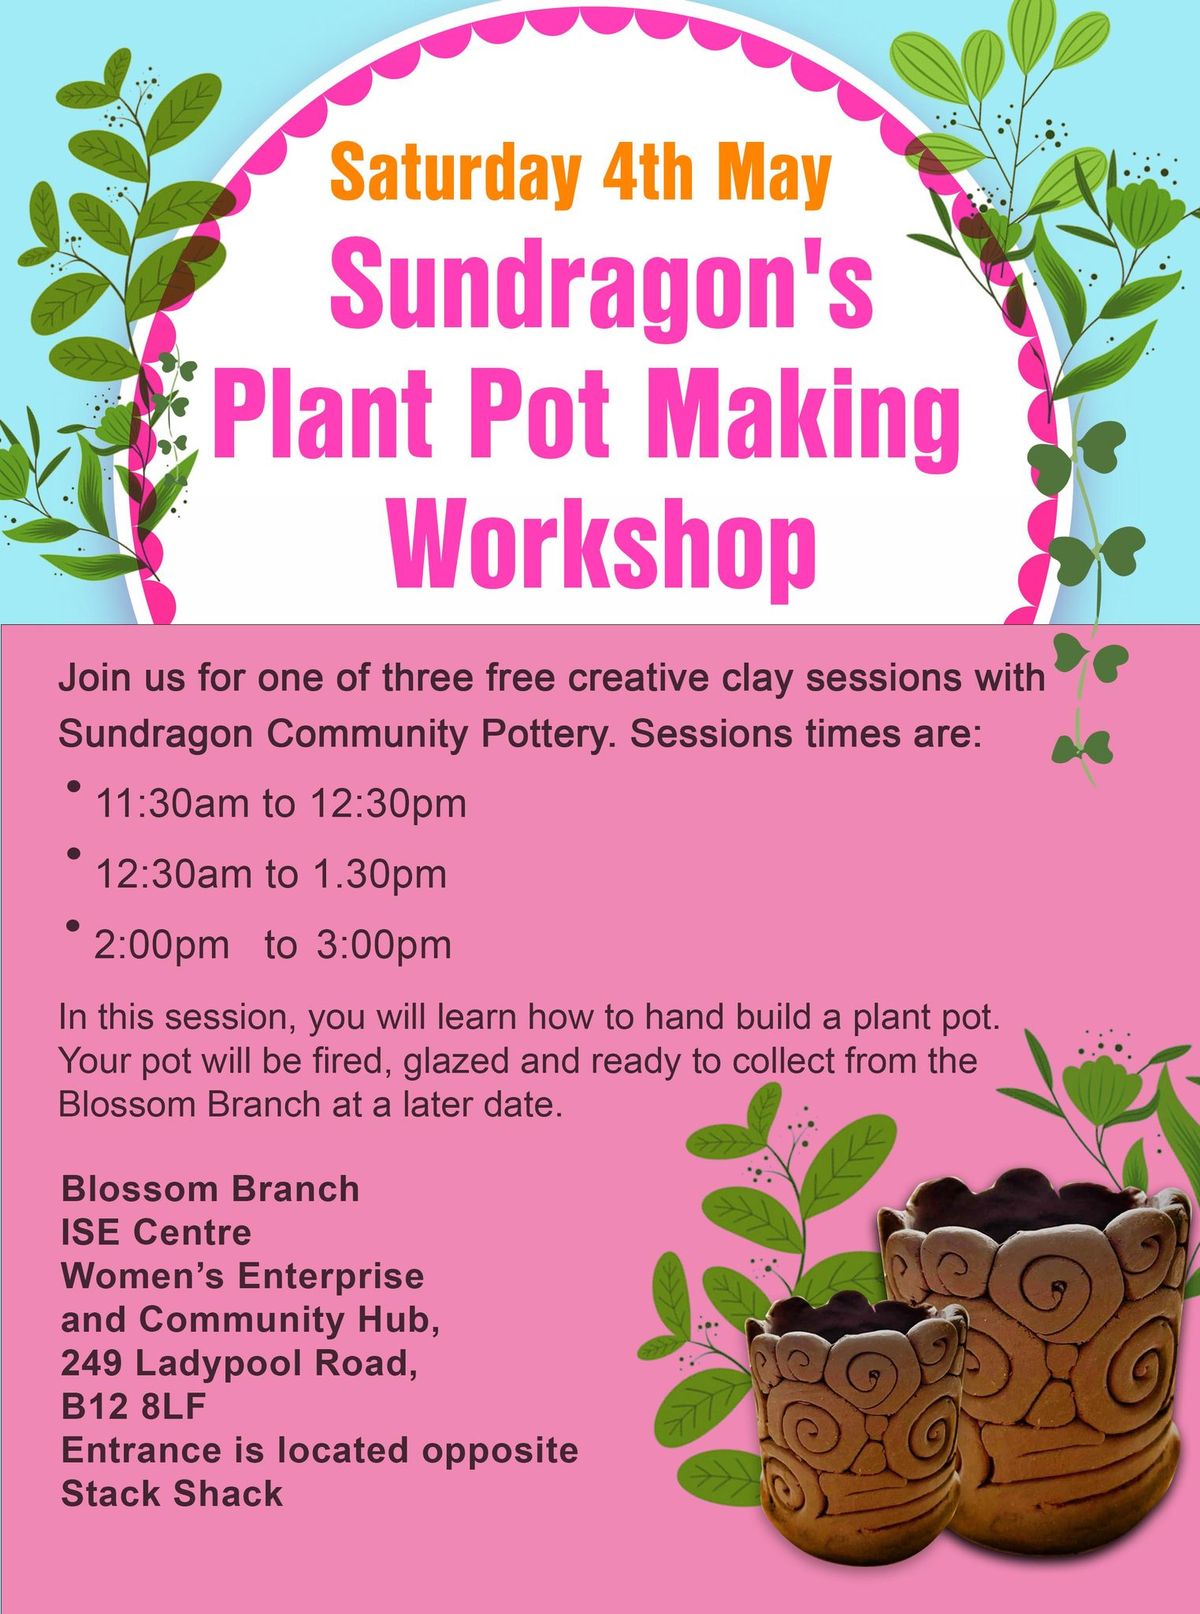 Sundragon's Plant Pot Making Workshop